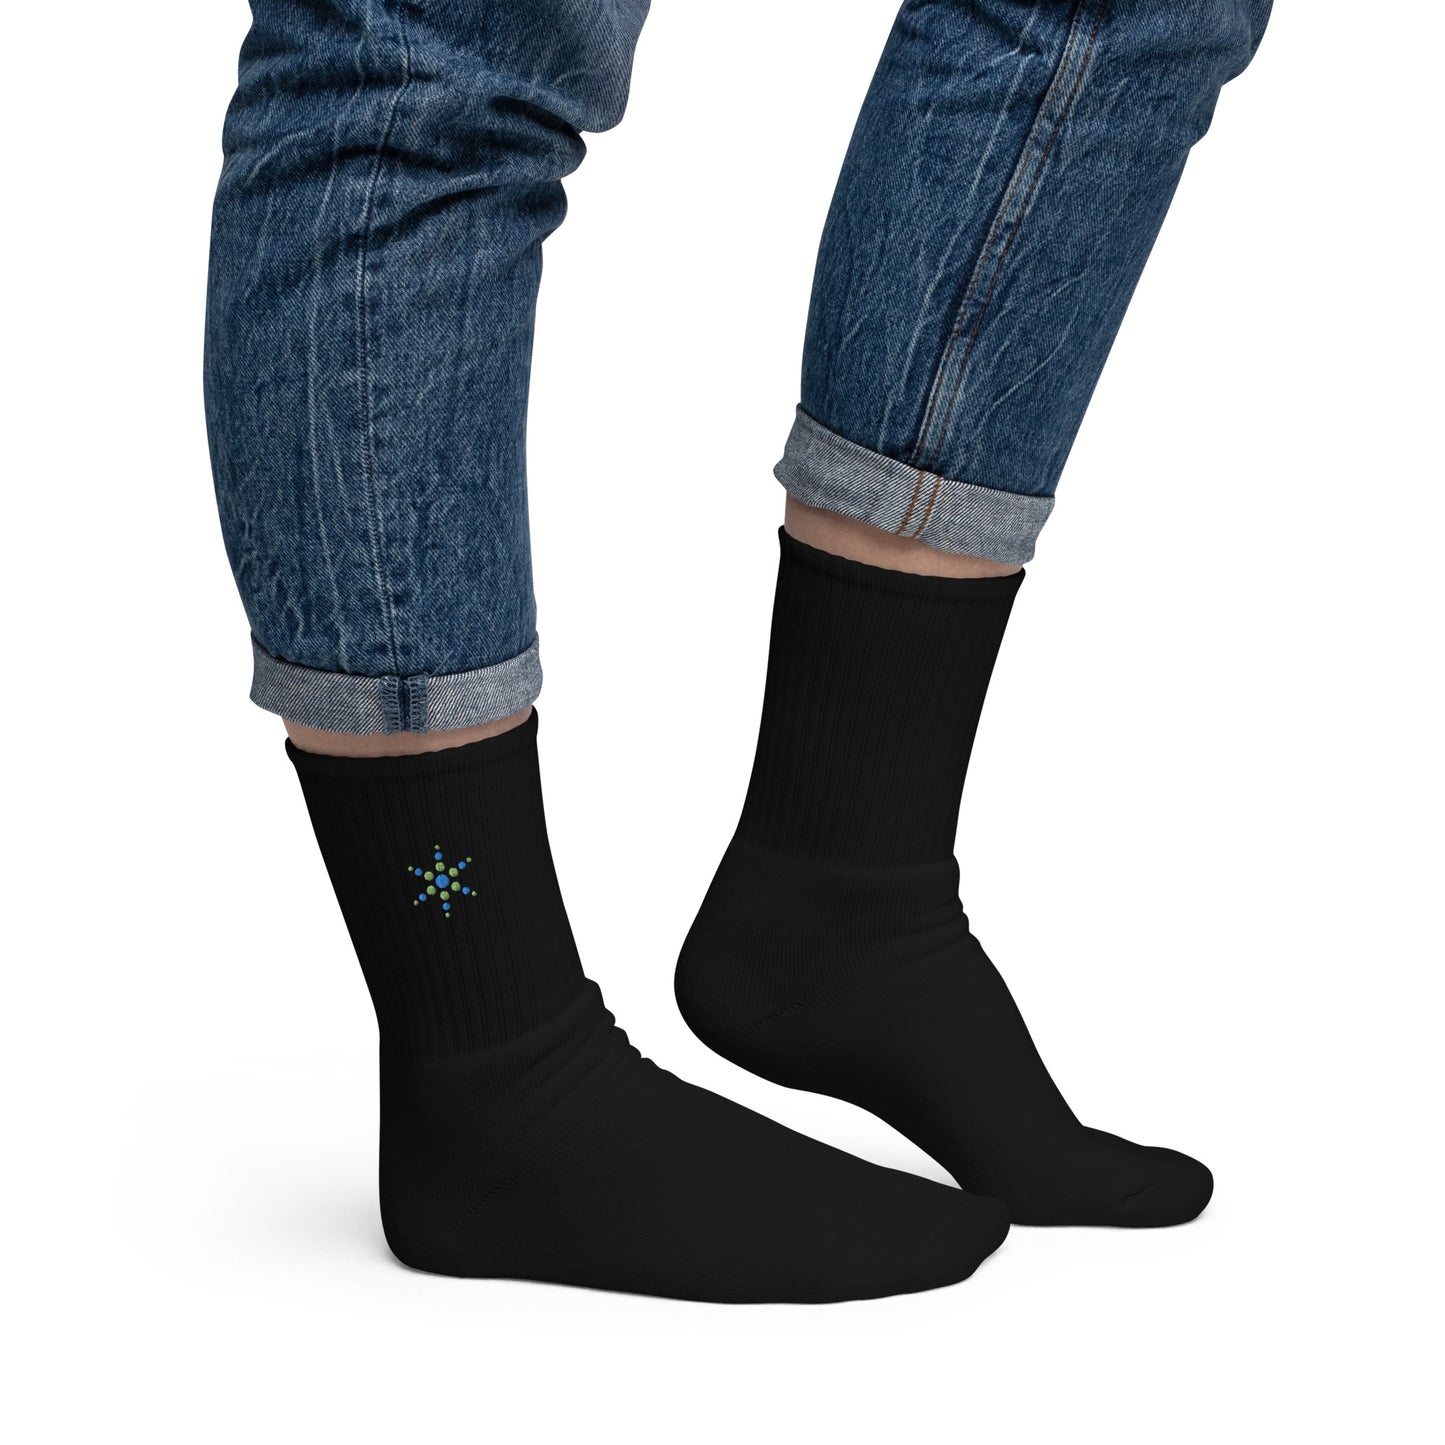 Starburst socks